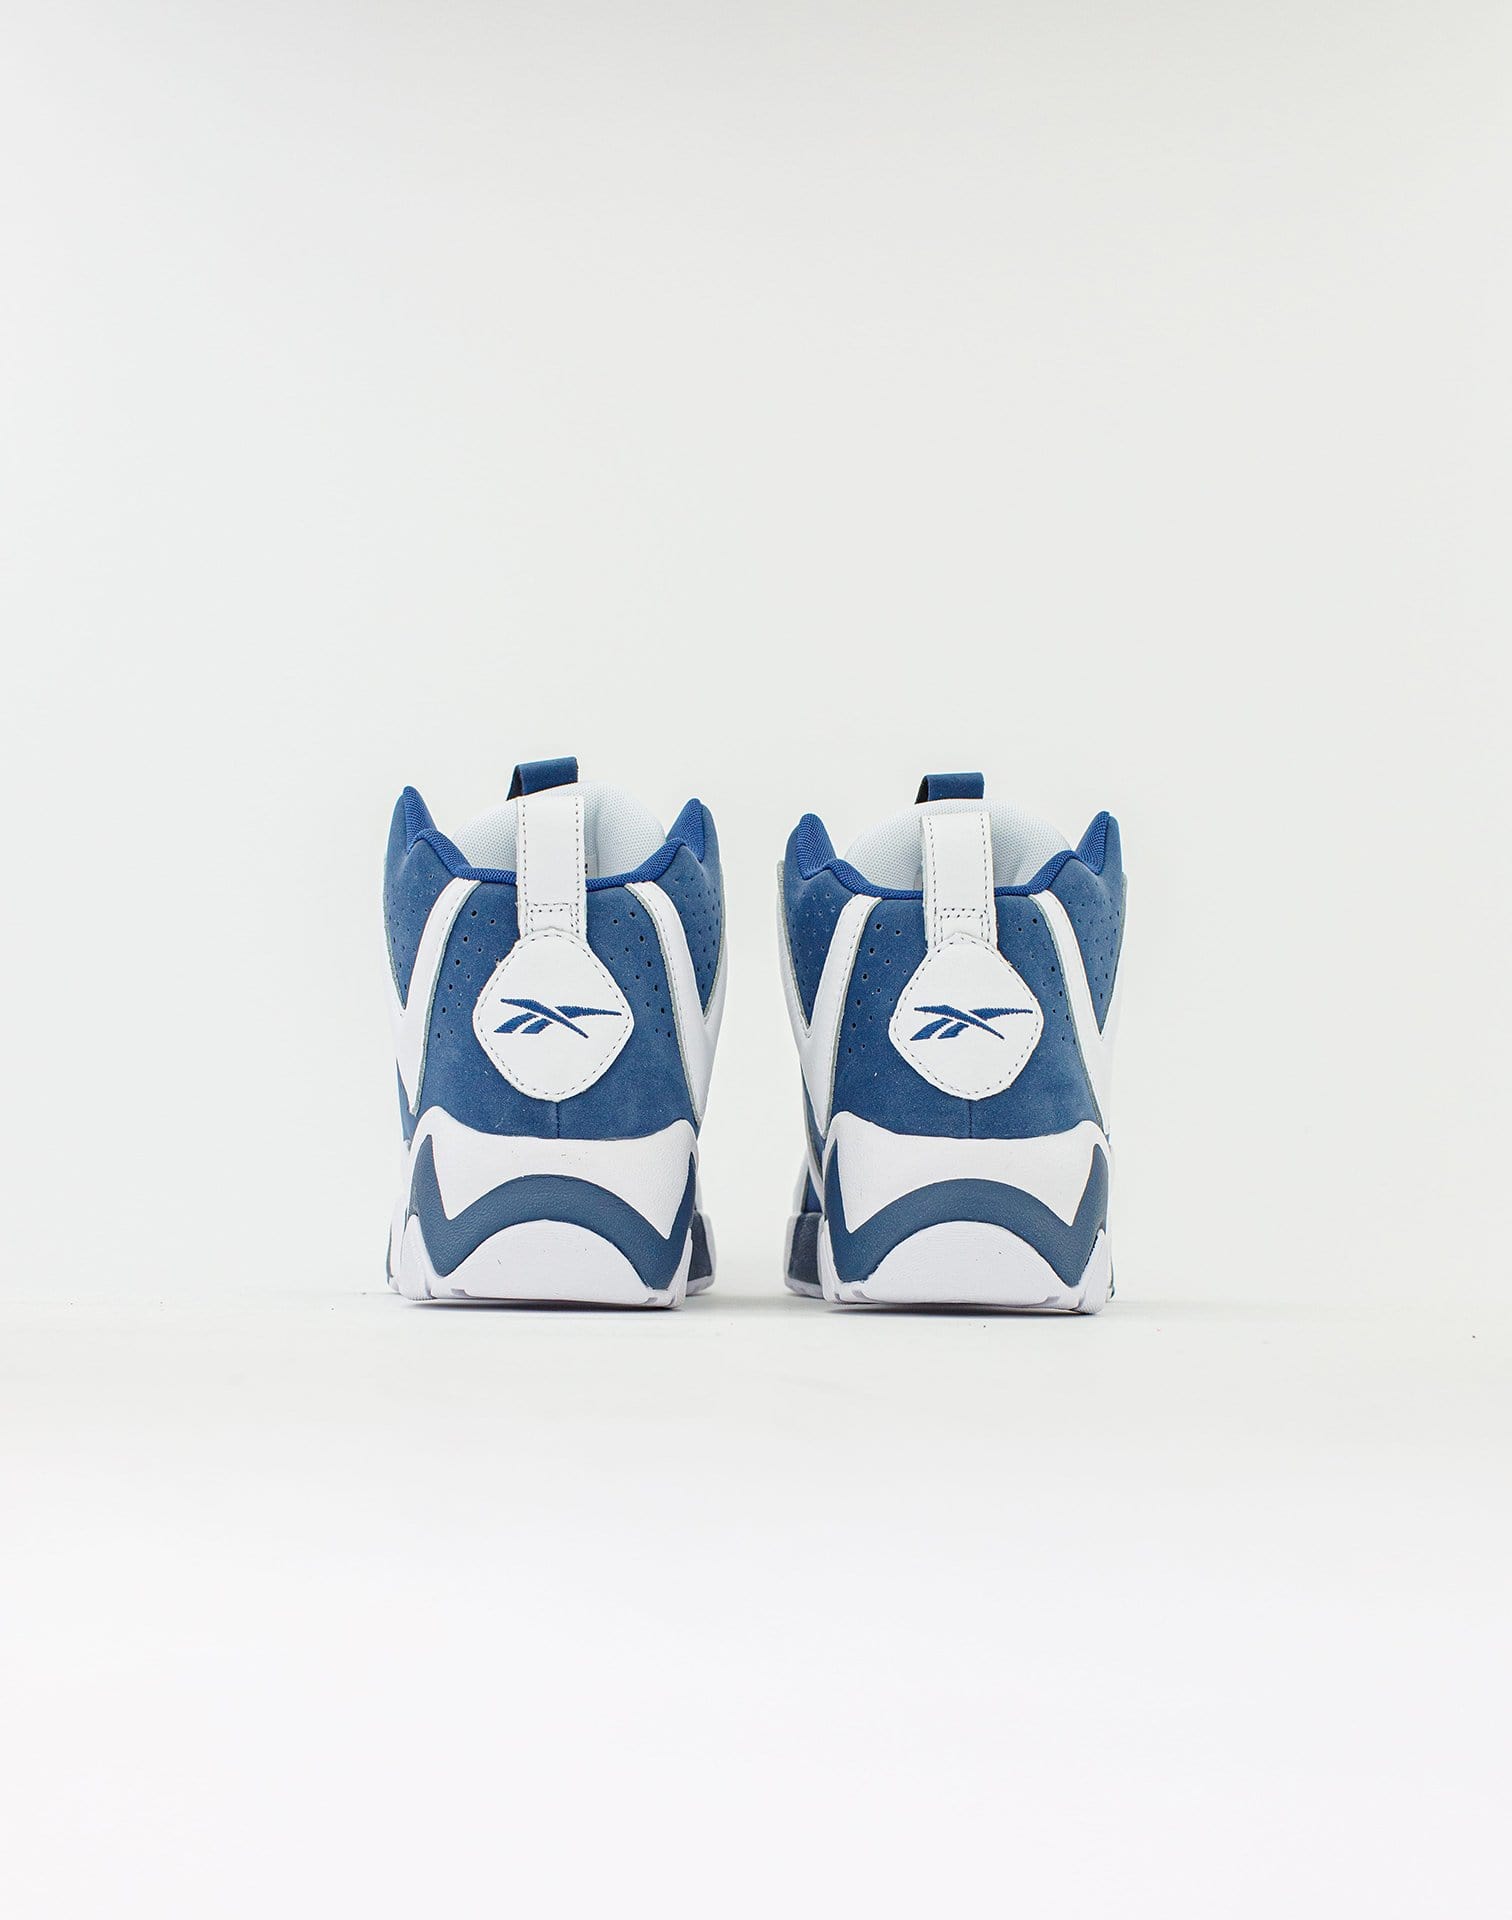 Reebok Kamikaze II Shoes Shawn Kemp Blue White GX6227 Mens Size